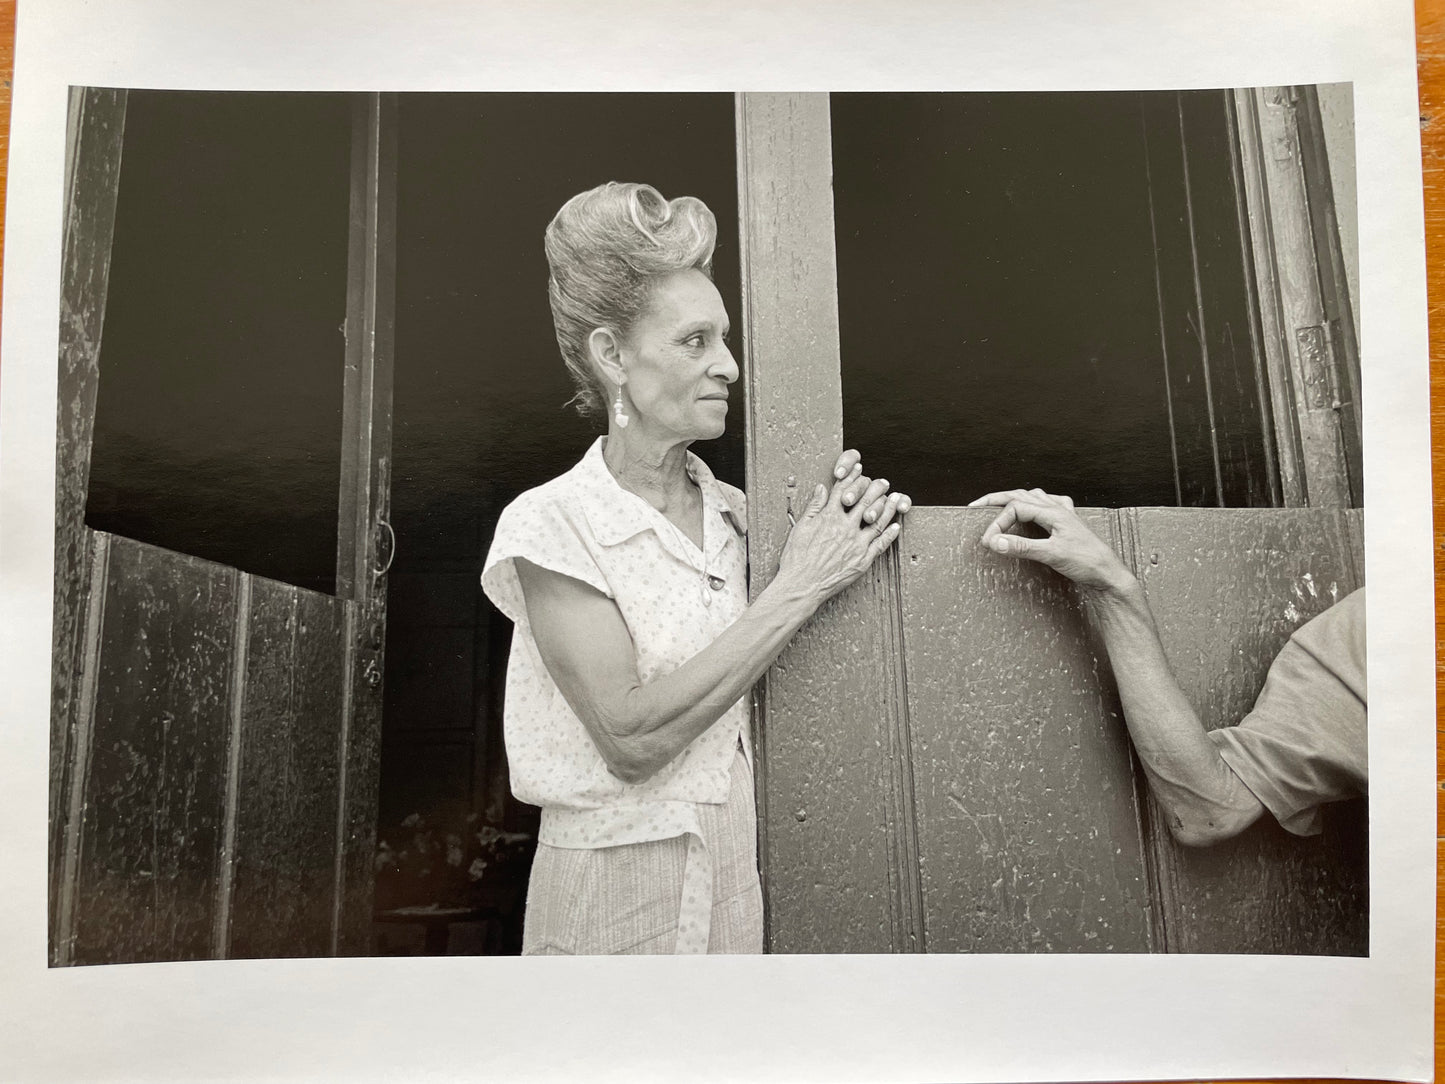 Susan S. Bank (American, 20th c.) Cuba Photograph Print Piercing through the darkness 11x14